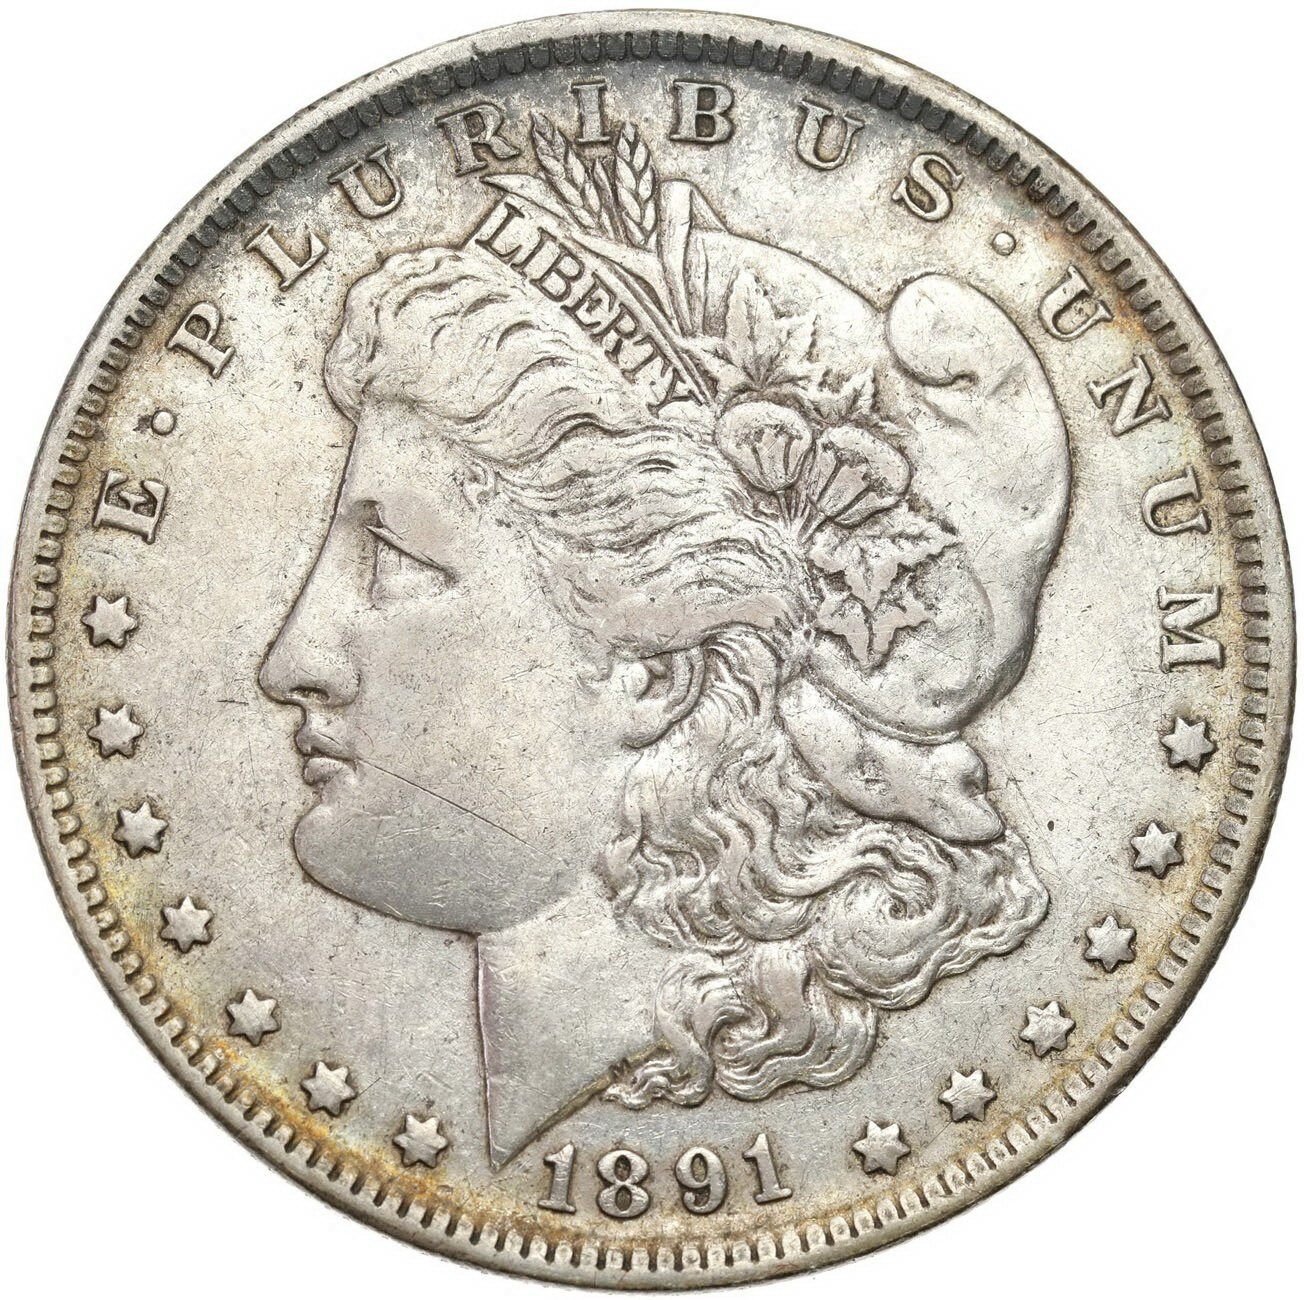 USA 1 dolar 1891 O, New Orleans 